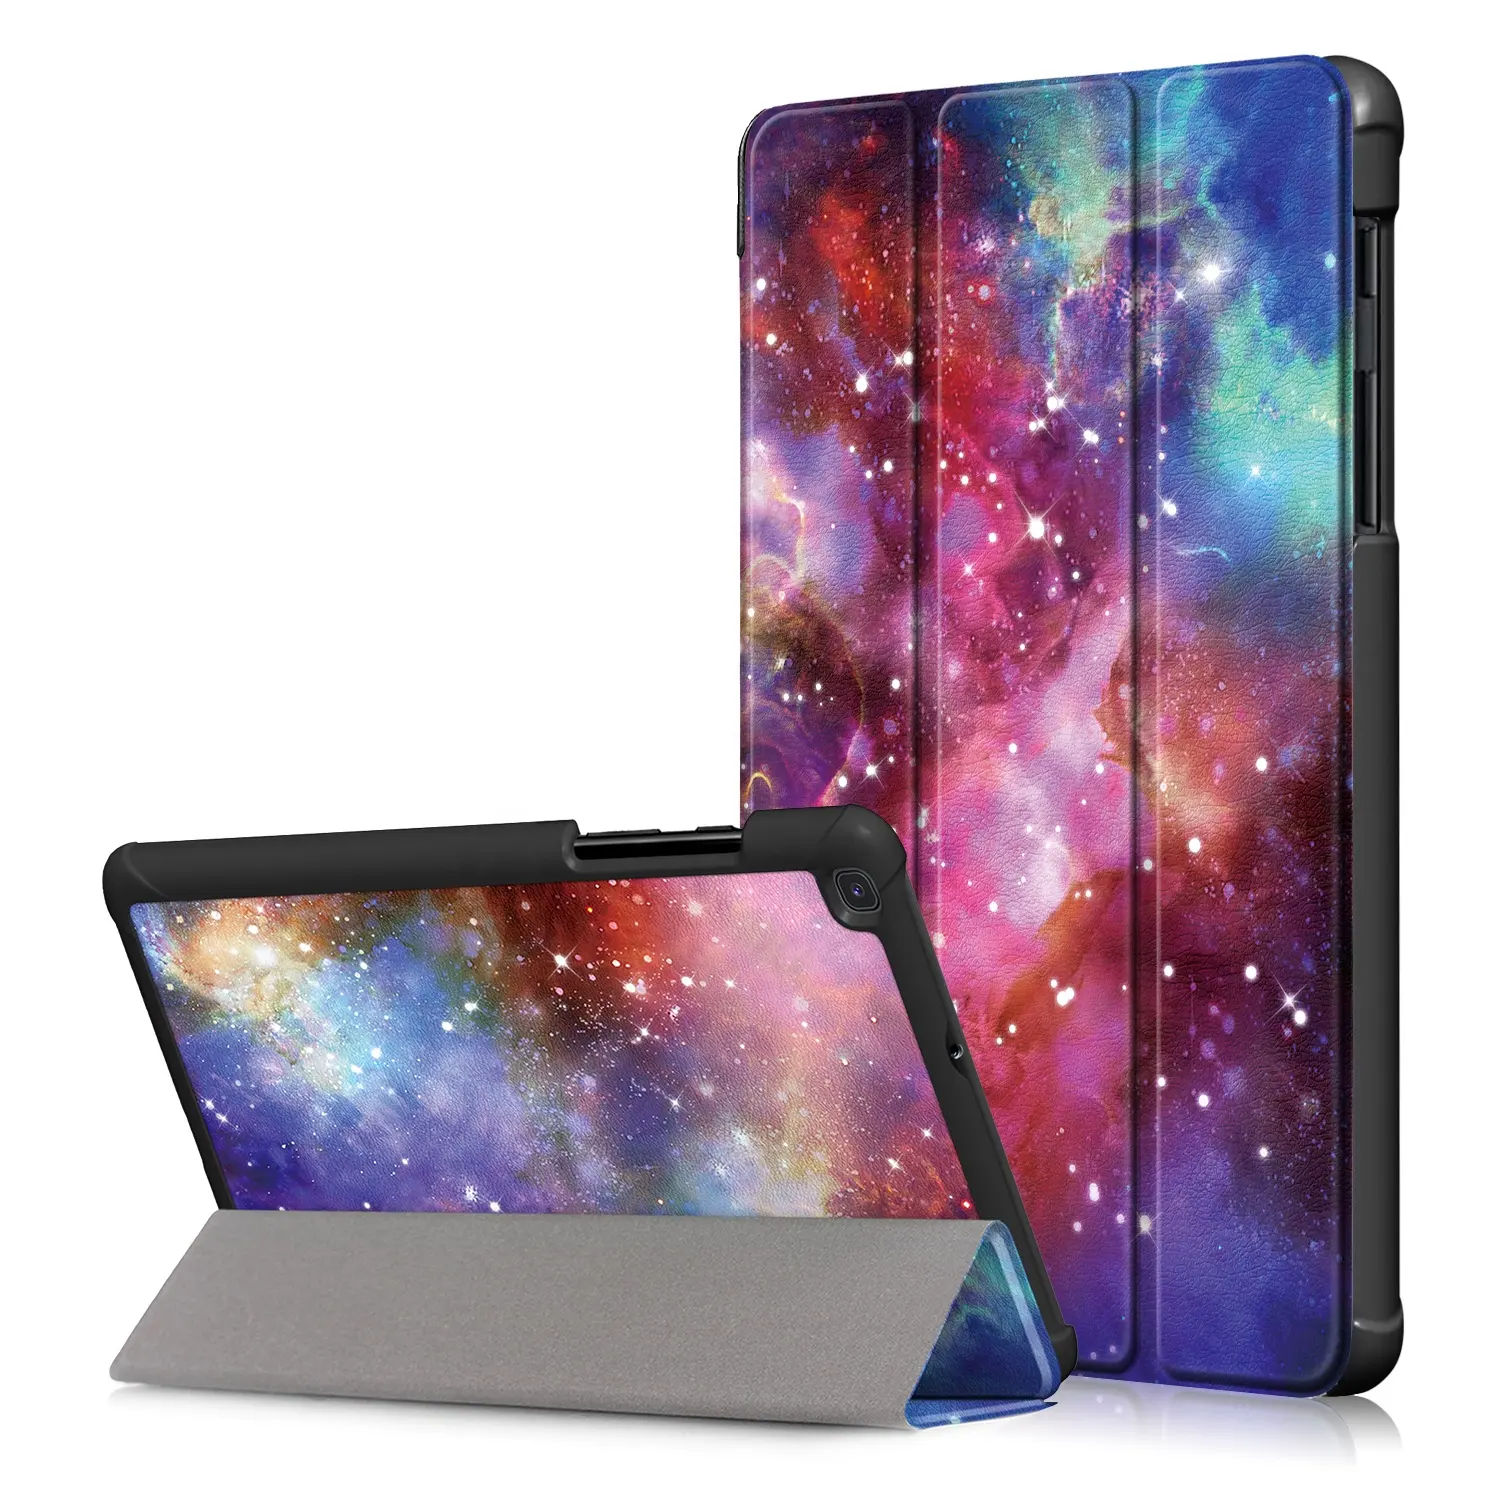 Casing Penutup Tablet Kulit PU Tahan Guncangan Perlindungan Penuh untuk Samsung Galaxy Tab A 8.0 2019 T290 T295 T297